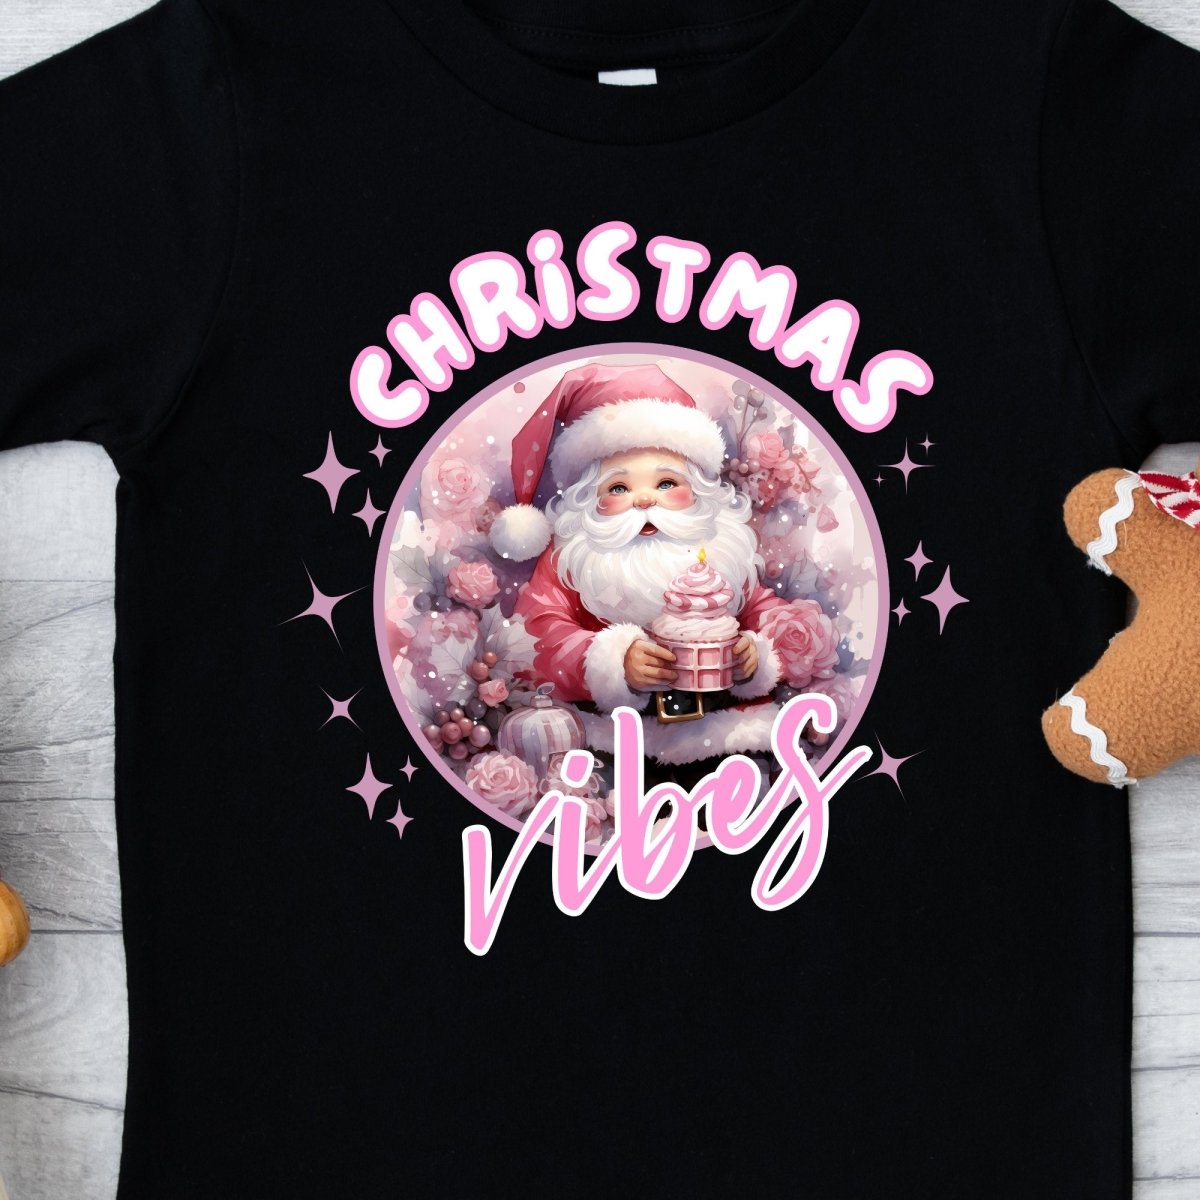 Christmas Vibes Santa T-Shirt - High Quality Funny Children T-Shirt, Pink Holiday Toddler Shirt, Christmas Vacation Tee, Pink Santa Shirt - Everything Pixel